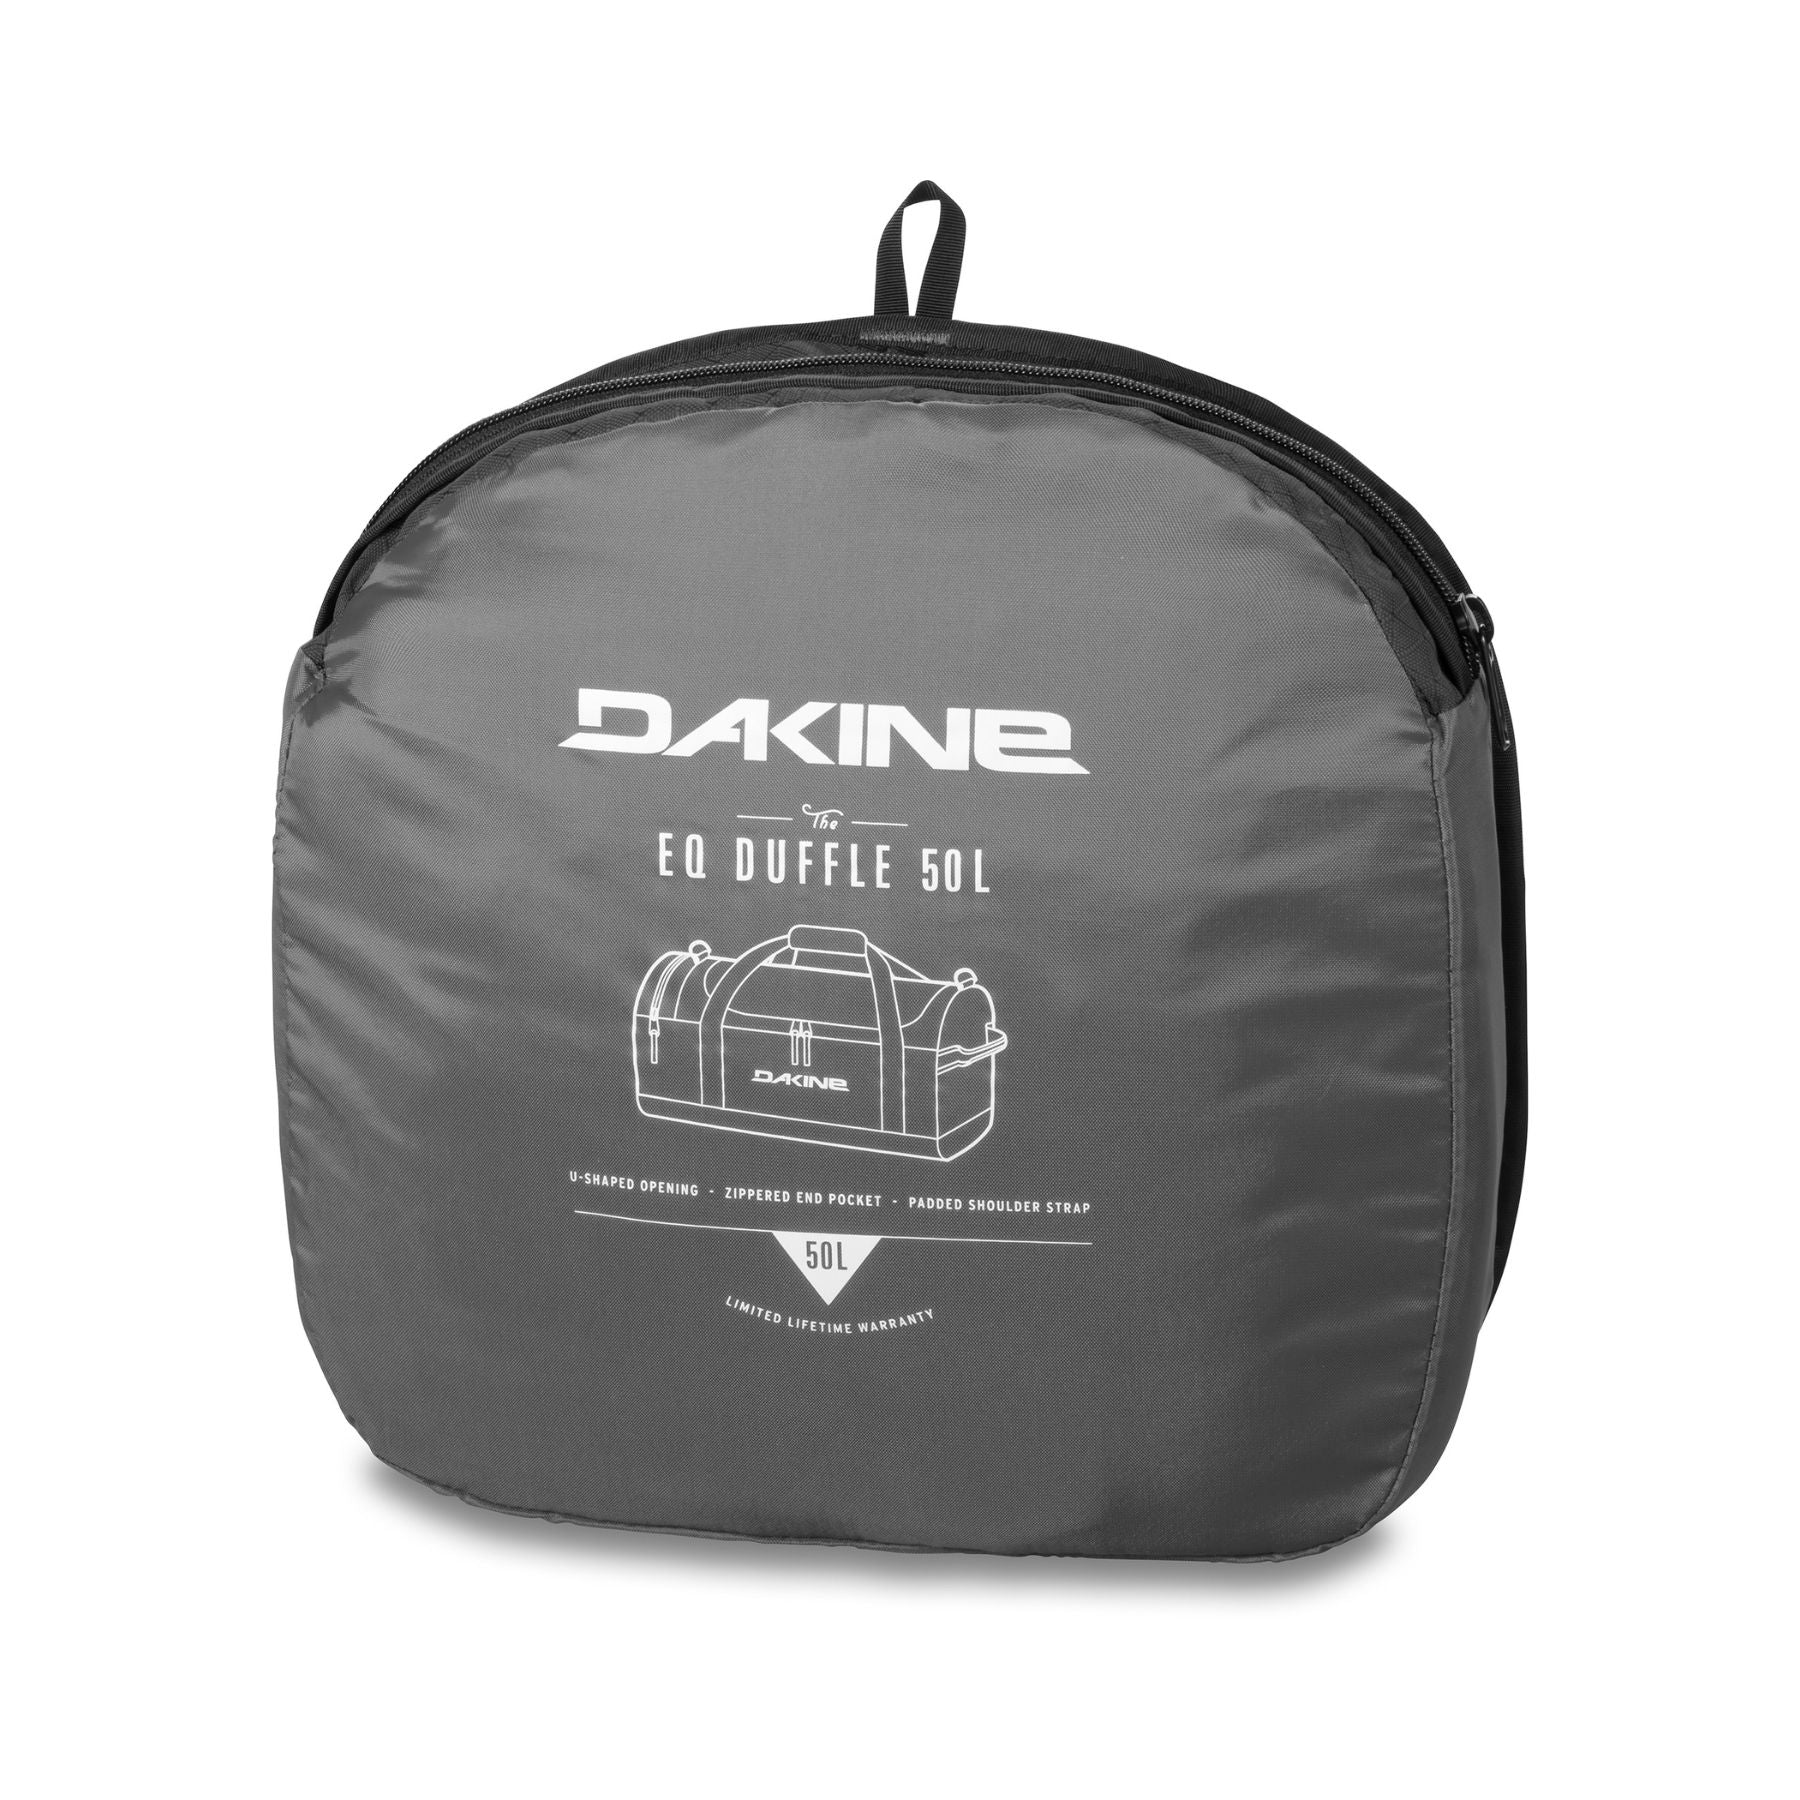 Dakine EQ Duffle 50L Bag in Black